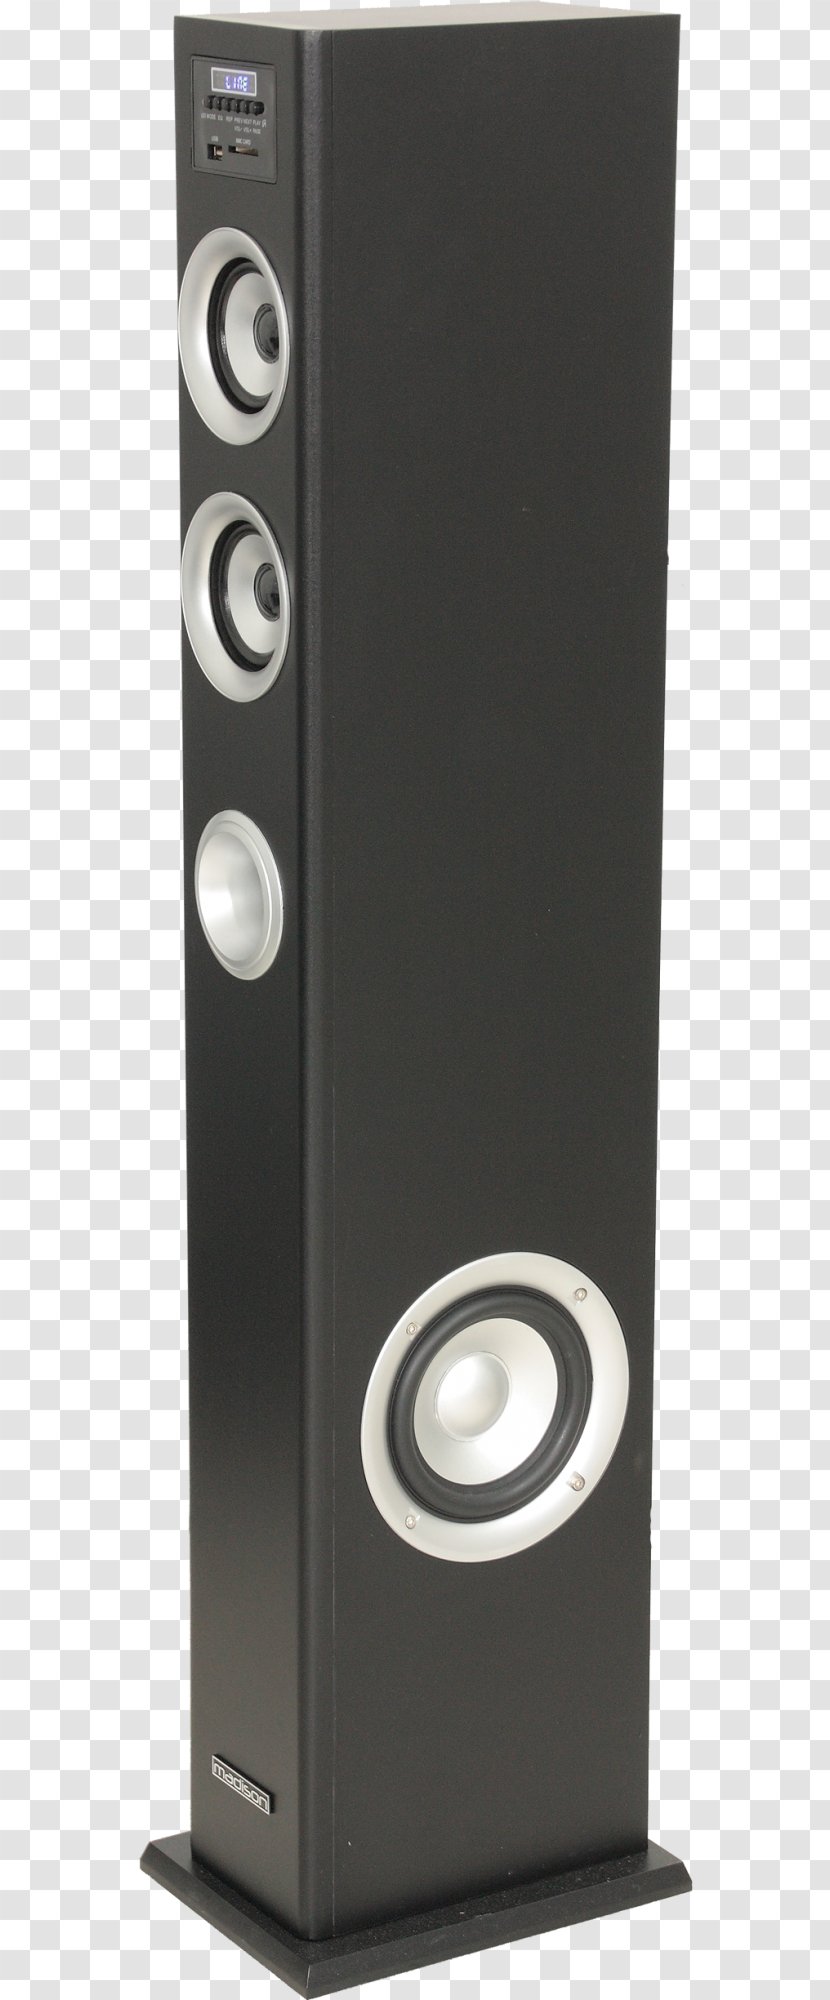 Subwoofer Computer Speakers Acoustics Loudspeaker Enclosure - Sounds From The Other Side Transparent PNG